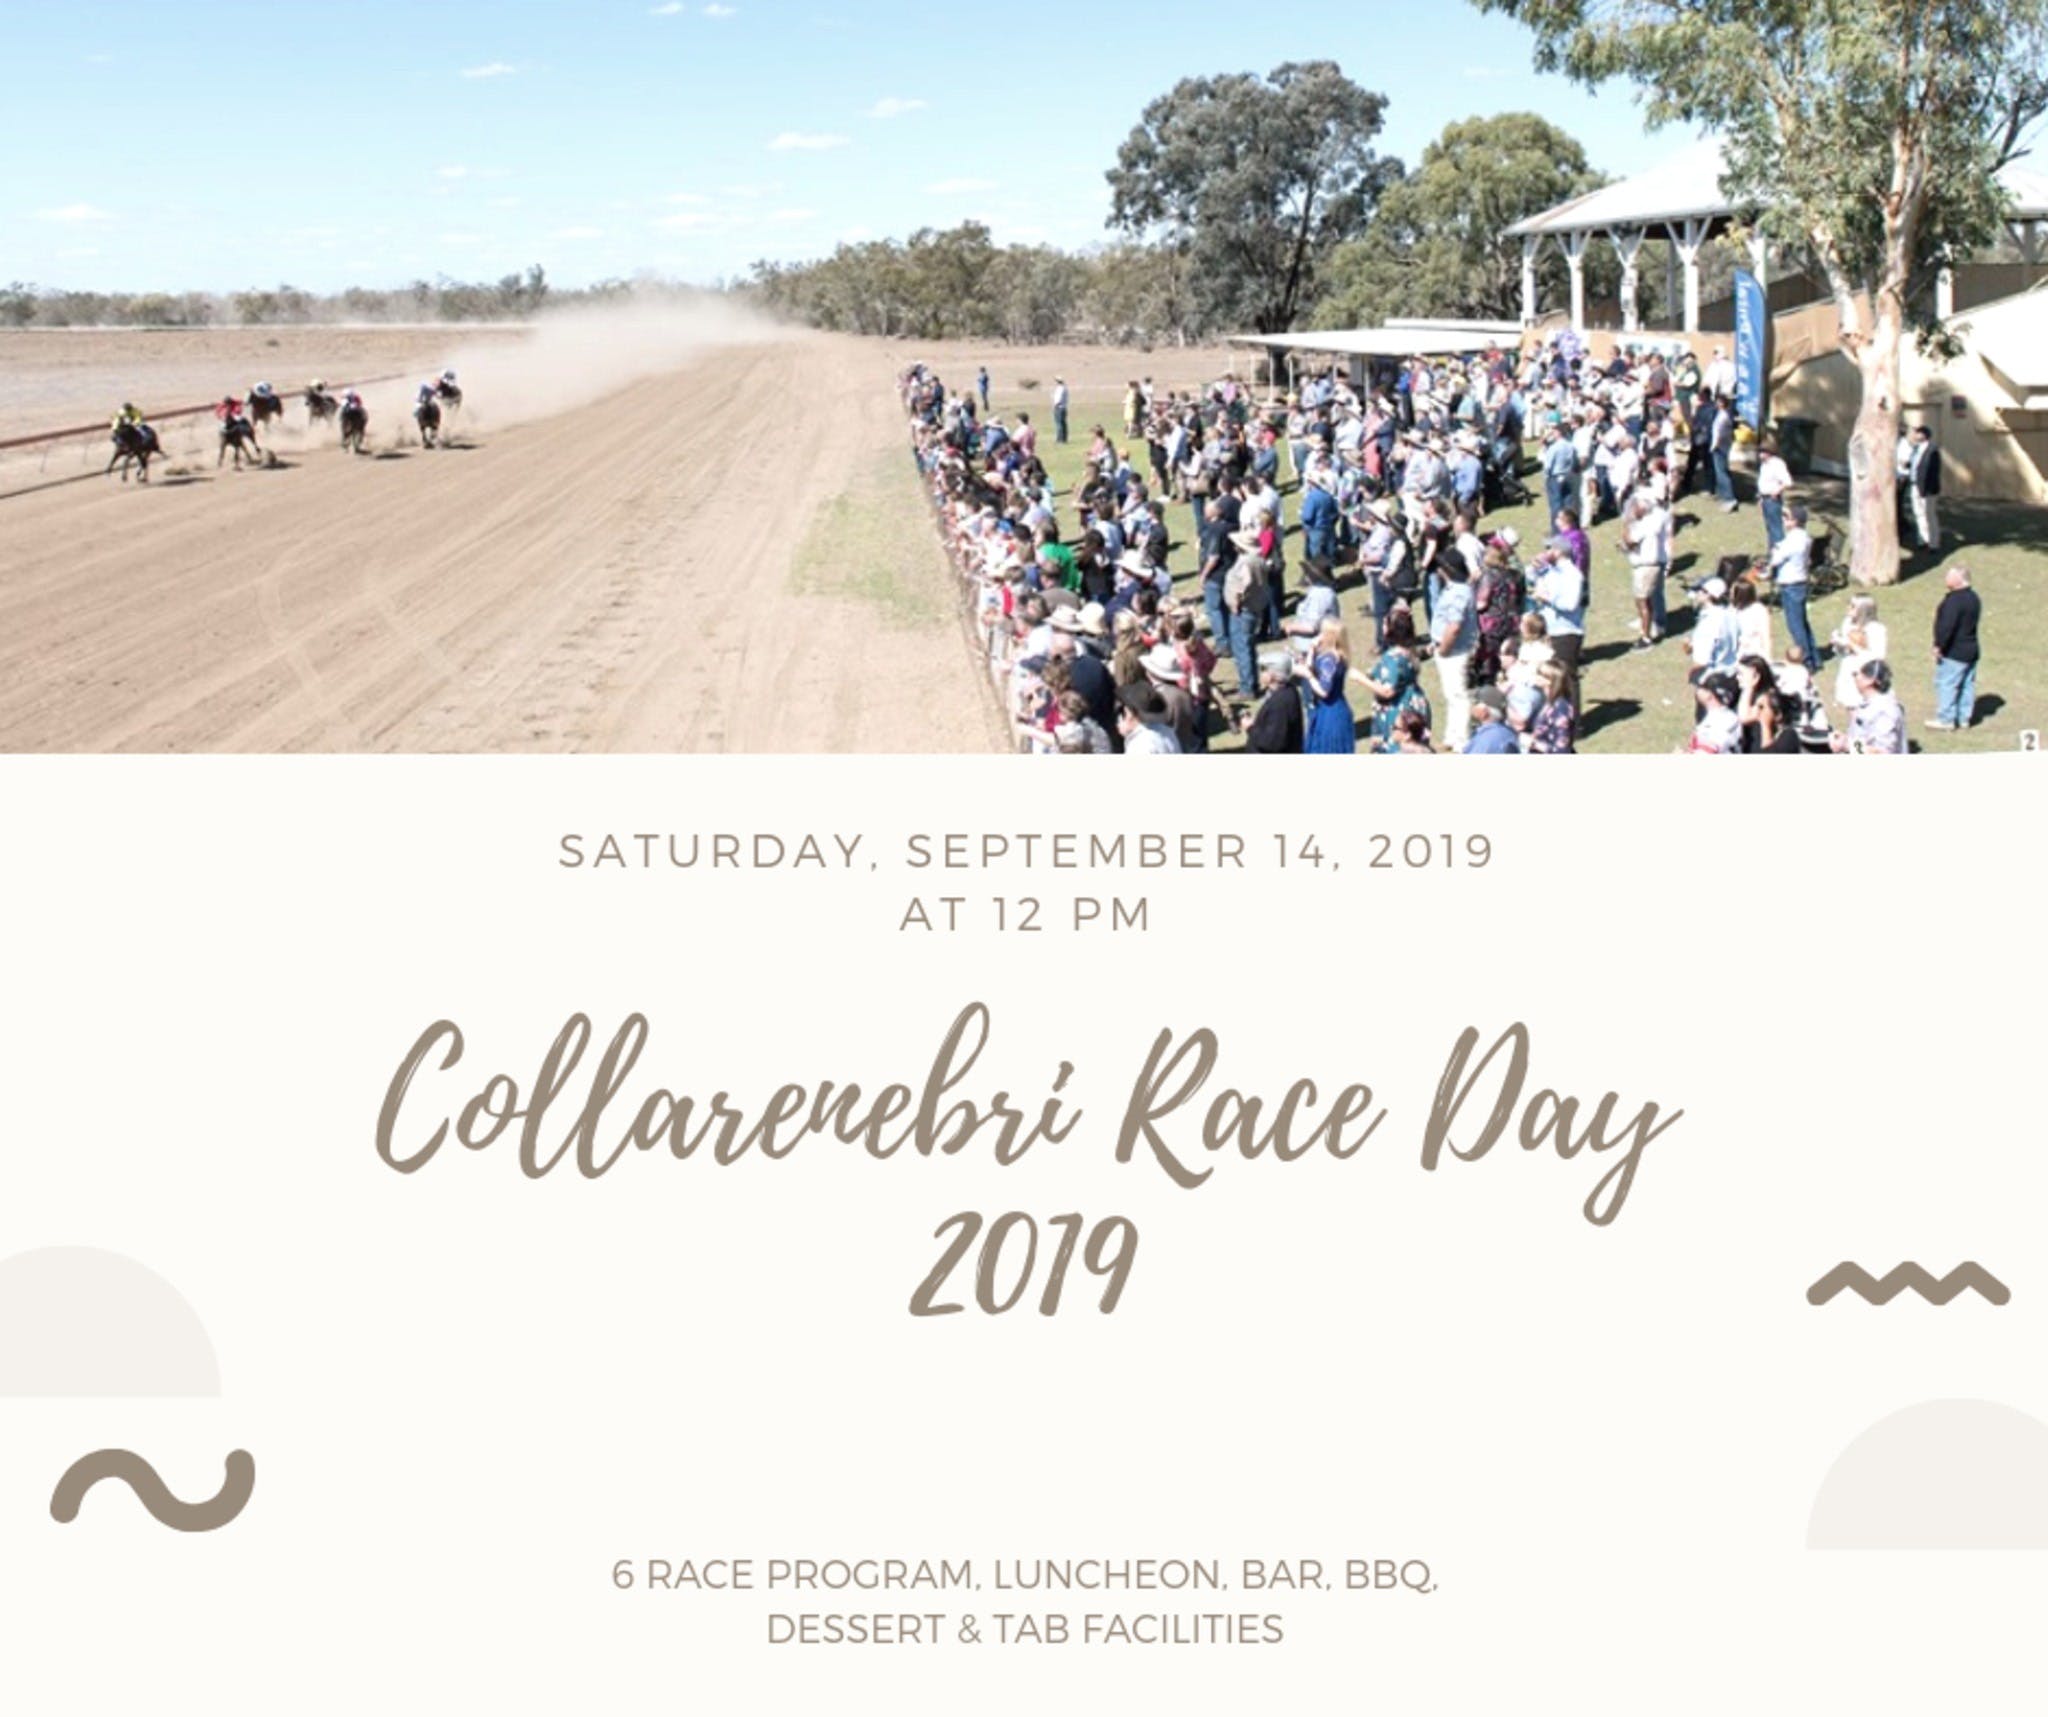 Collarenebri Races - Tourism Canberra